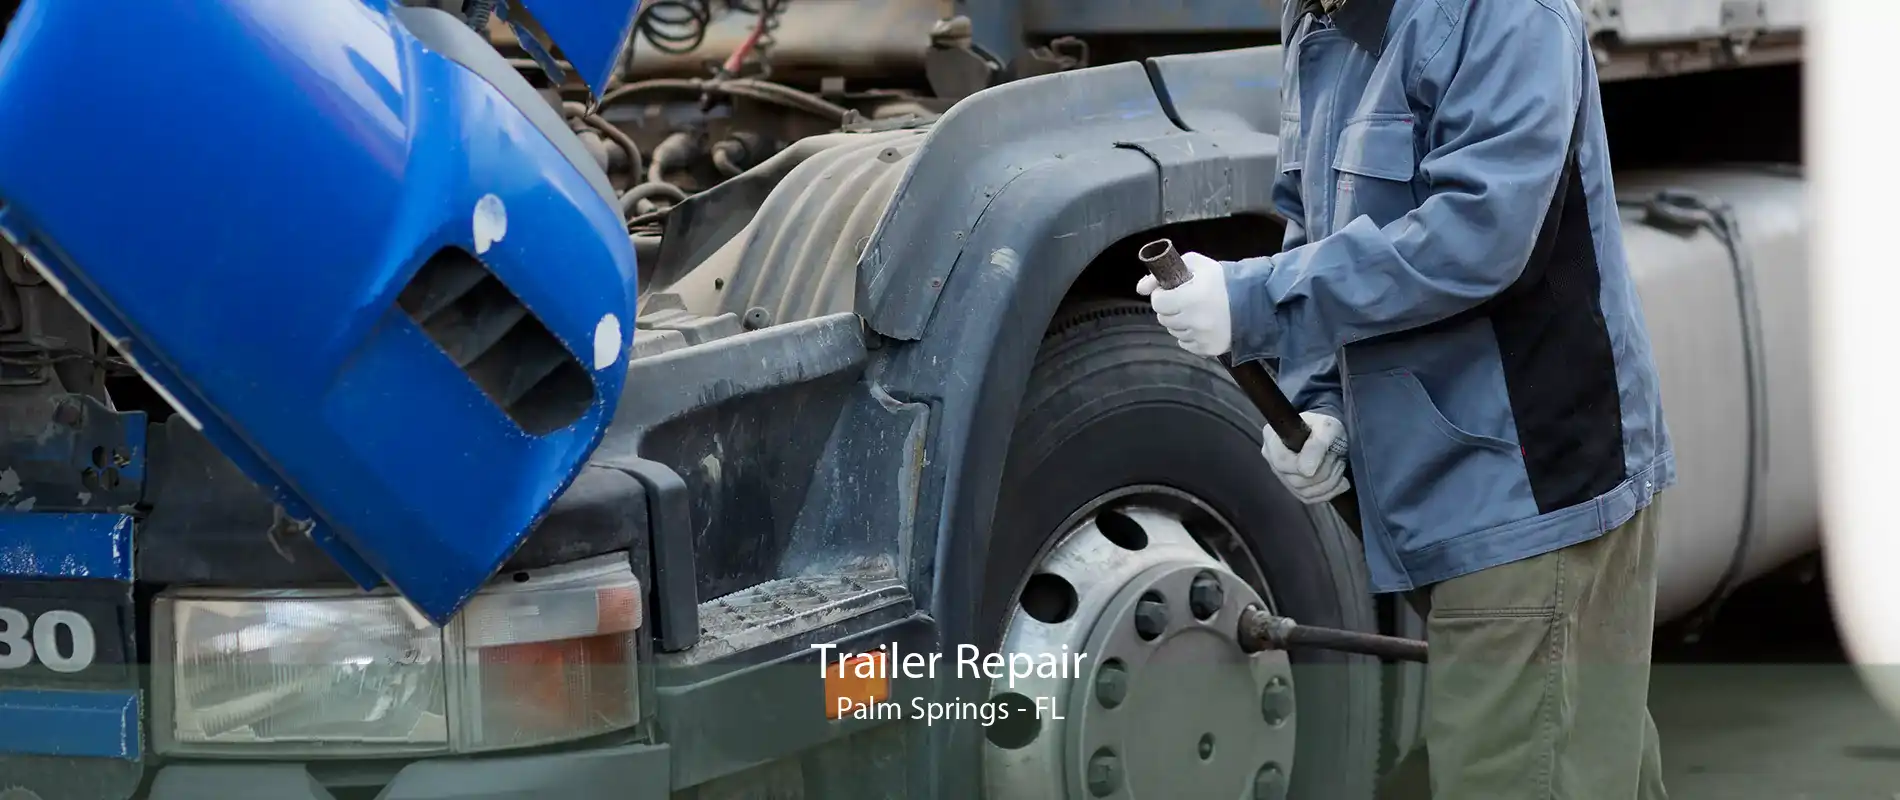 Trailer Repair Palm Springs - FL